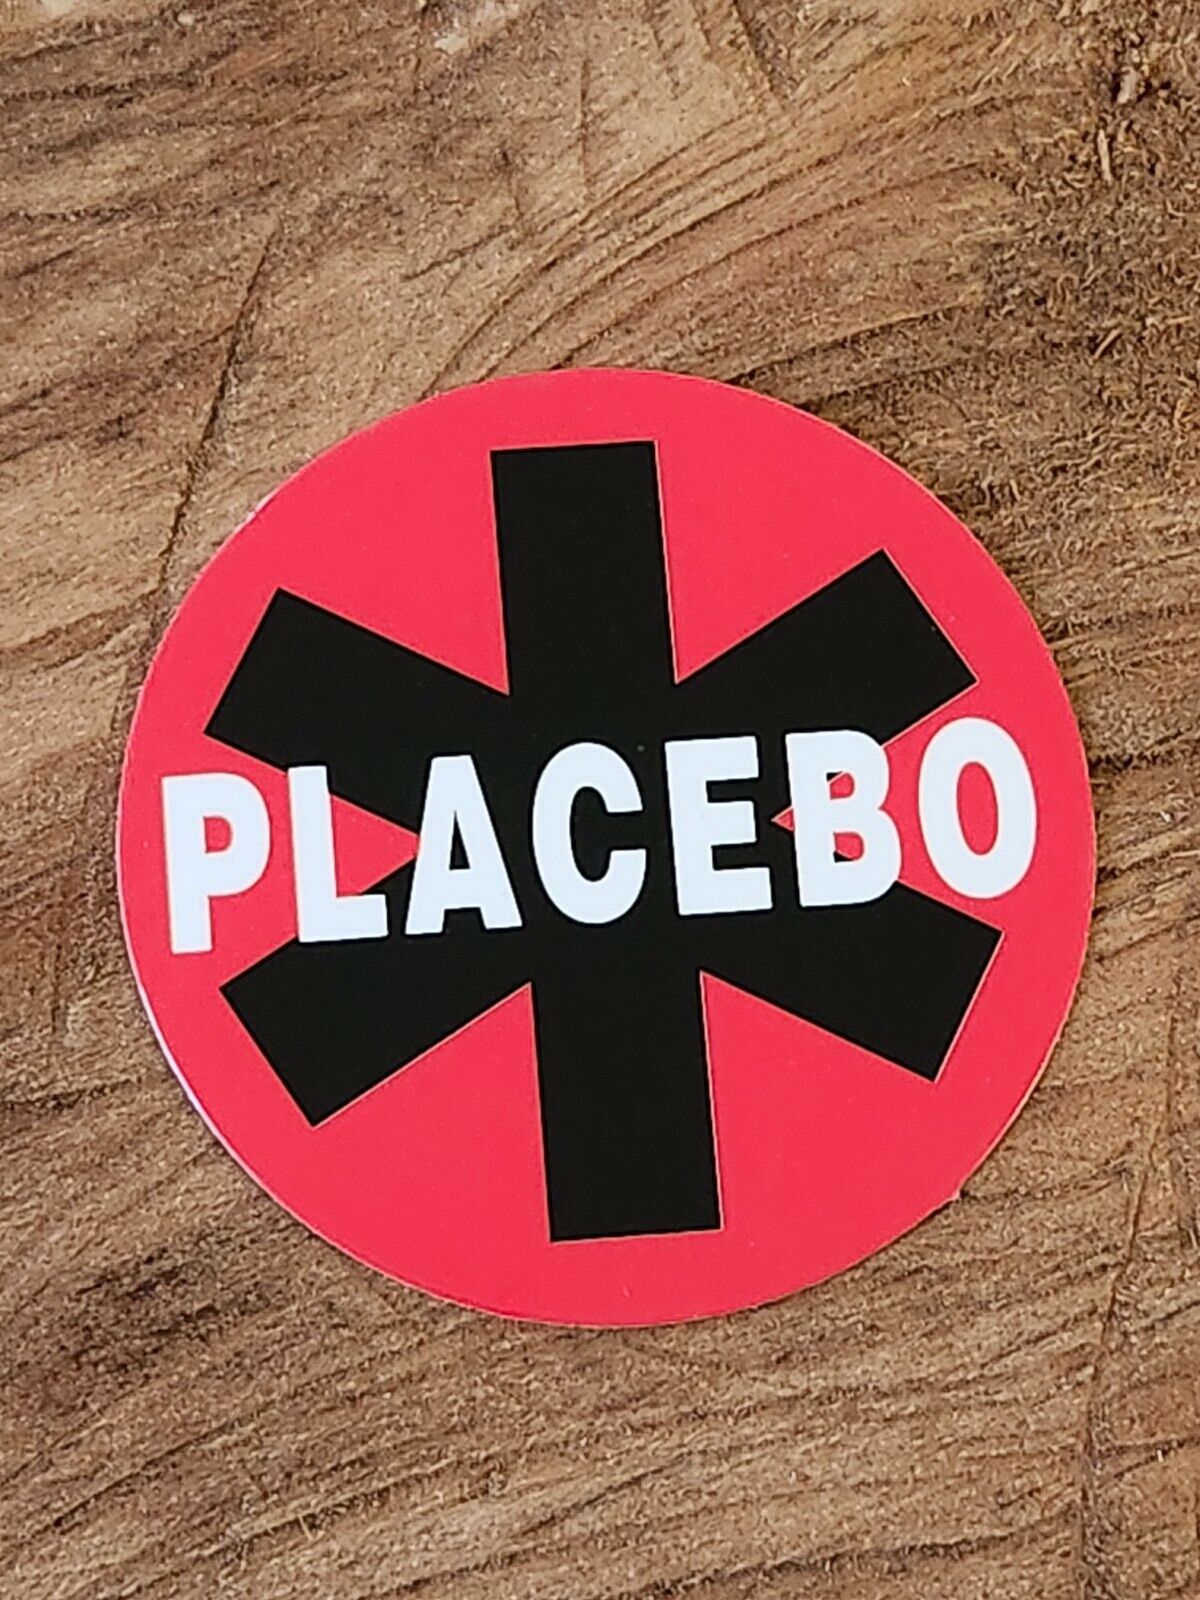 PLACEBO Sticker PLACEBO Decal Sticker 90s Alternative Rock Sticker 90s Music